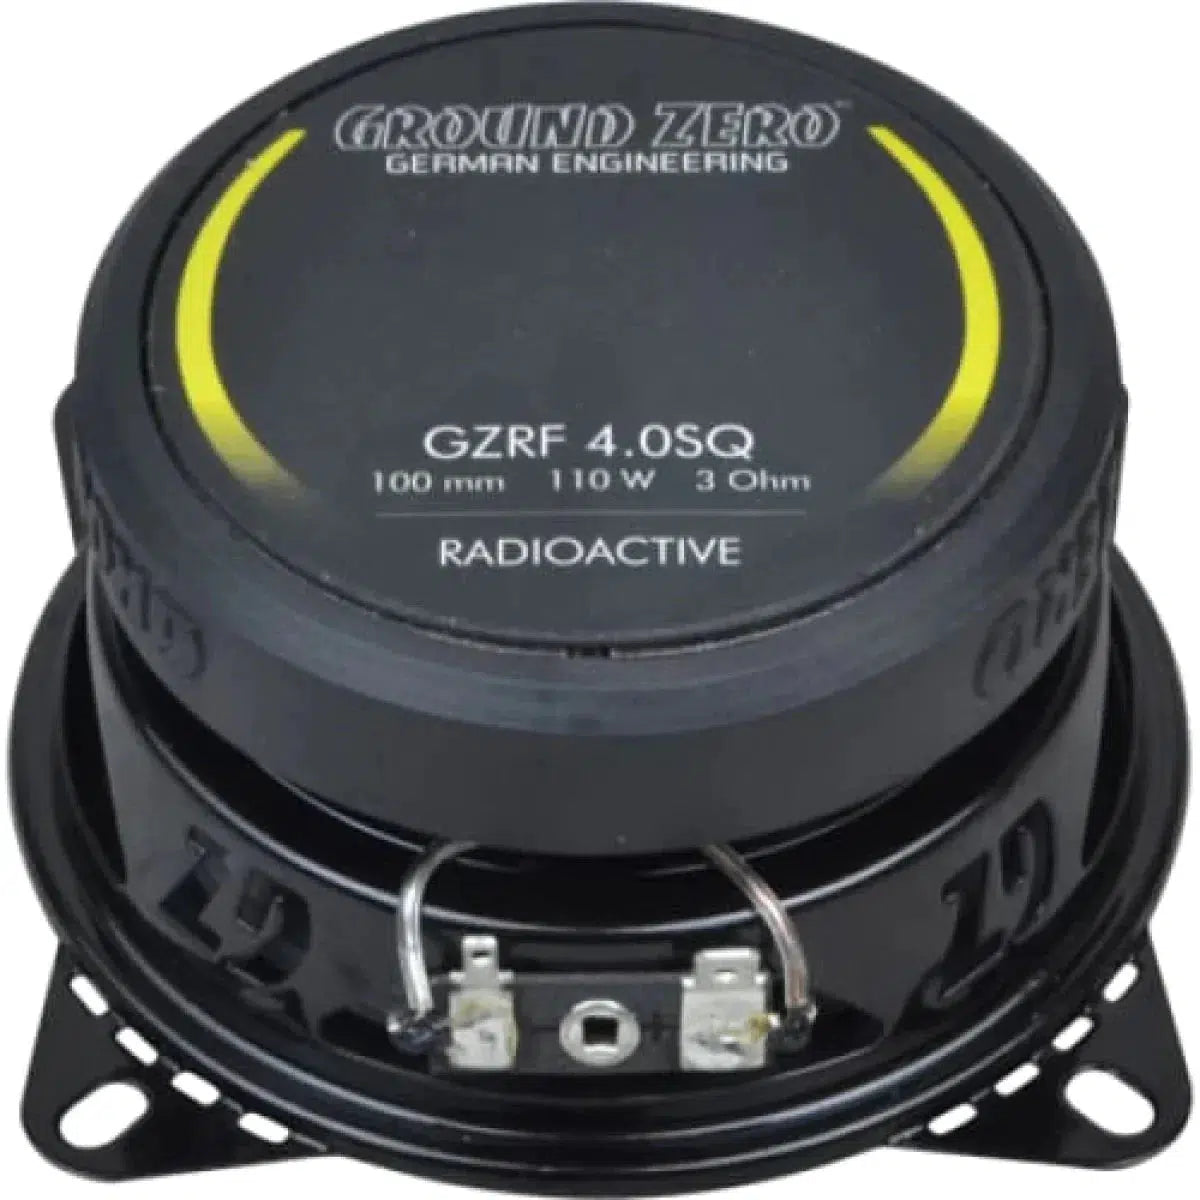 Ground Zero-Radioactive GZRF 4.0SQ-4" (10cm) Coaxial-Loudspeaker-Masori.de